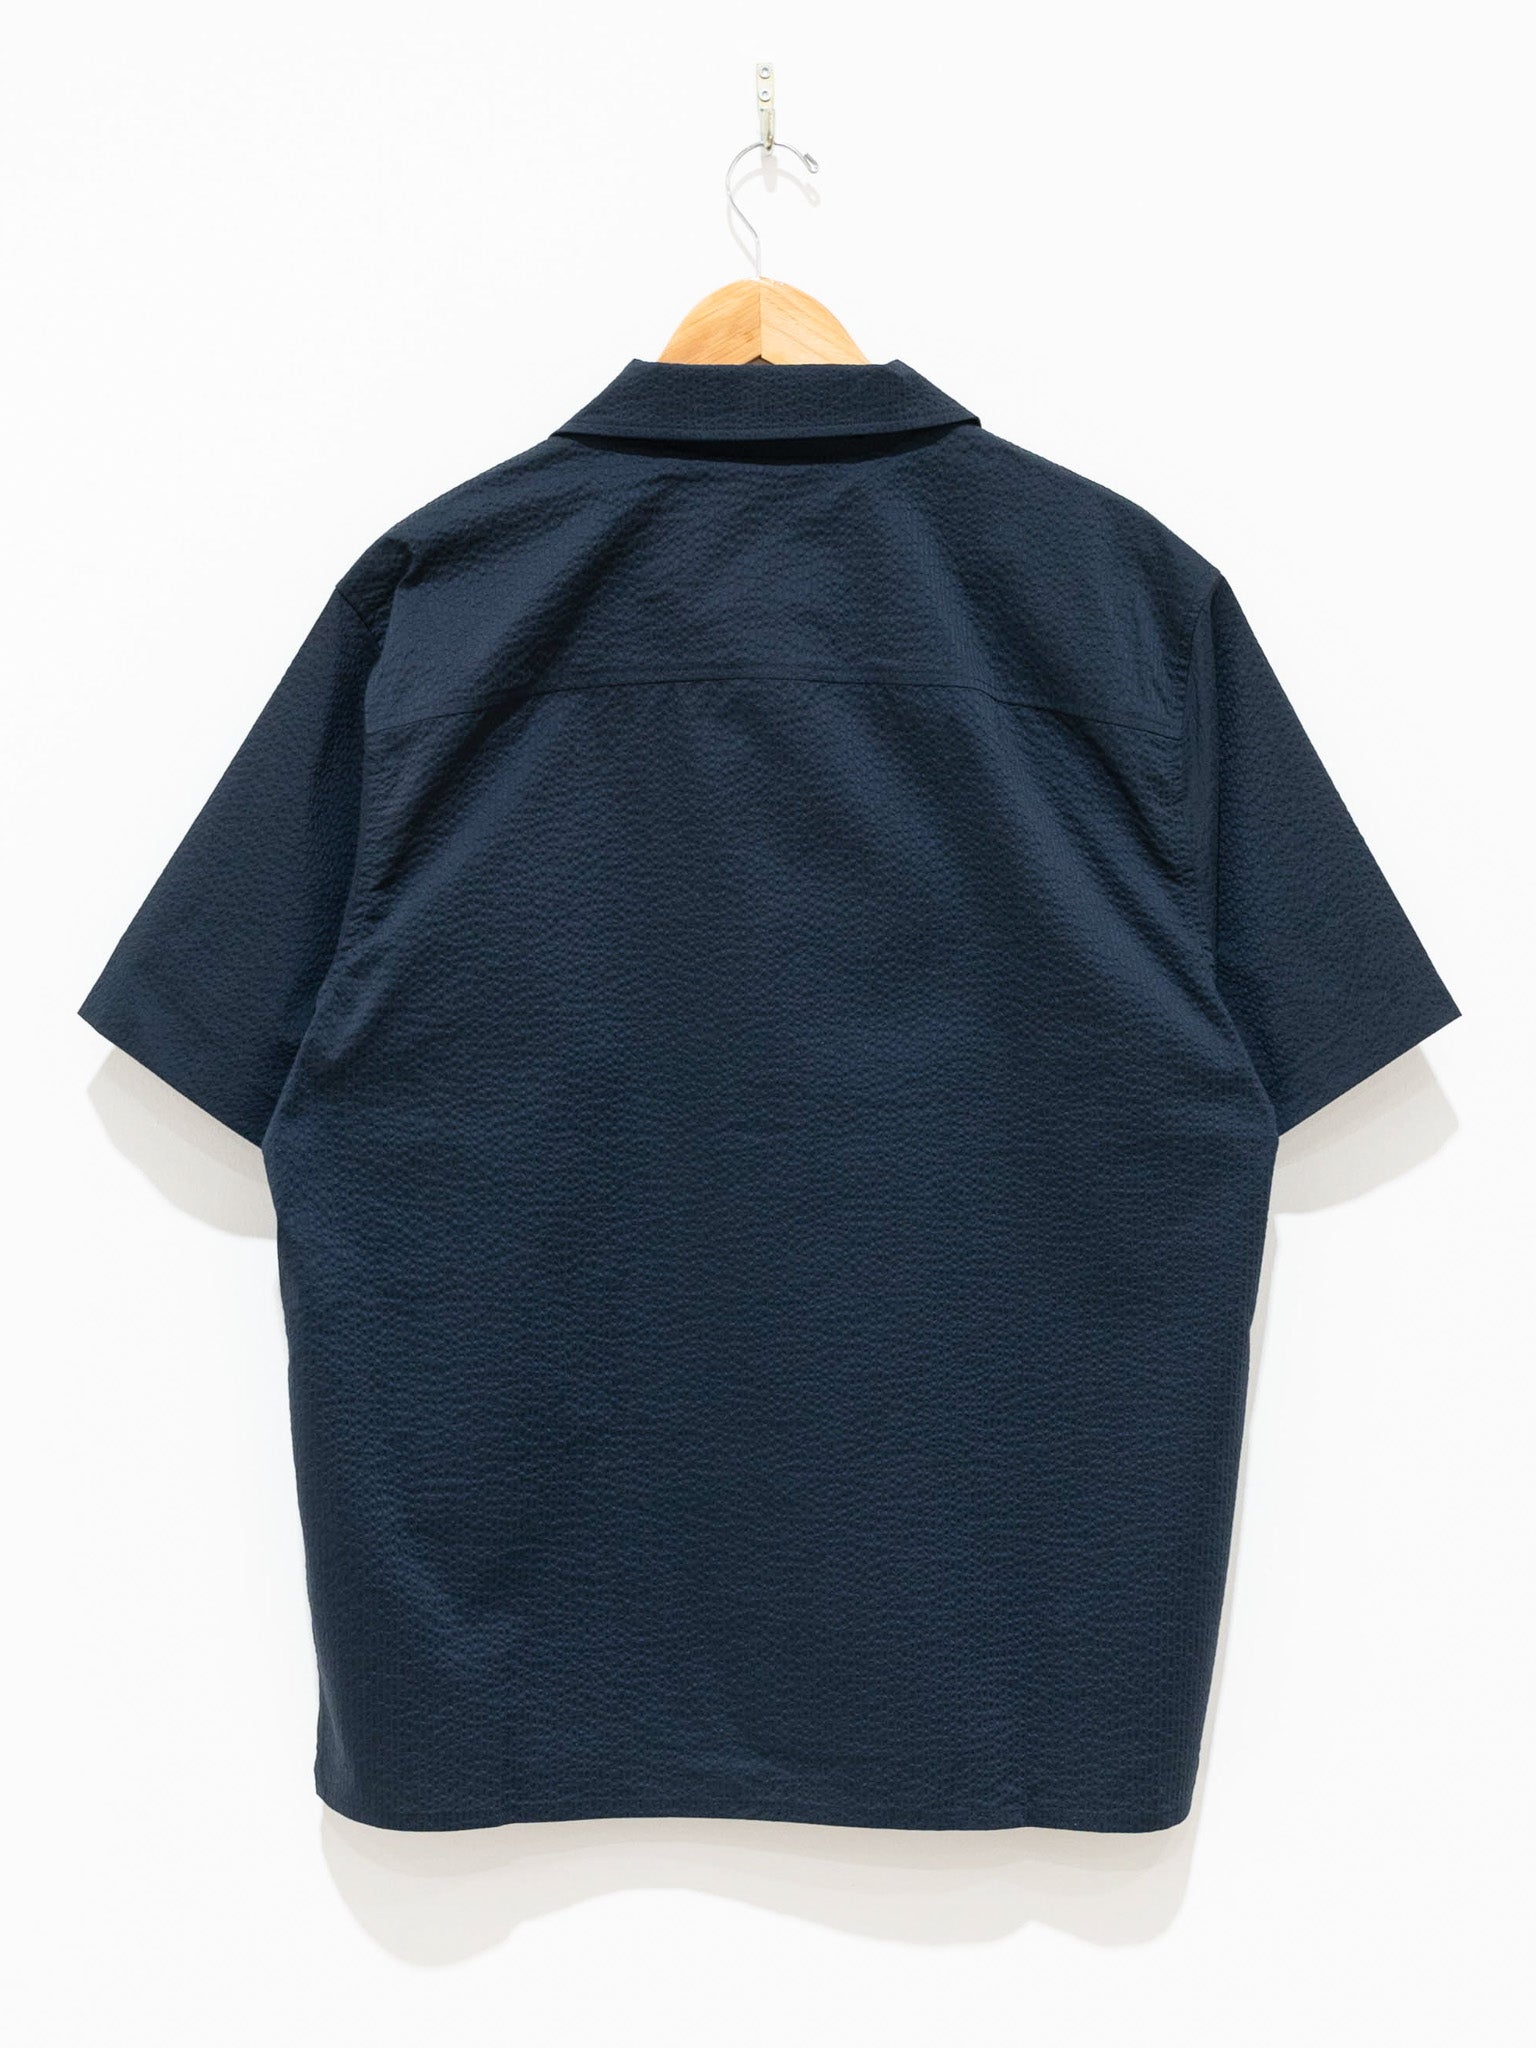 Namu Shop - Document Seersucker Handkerchief Shirt - Navy (restocked)